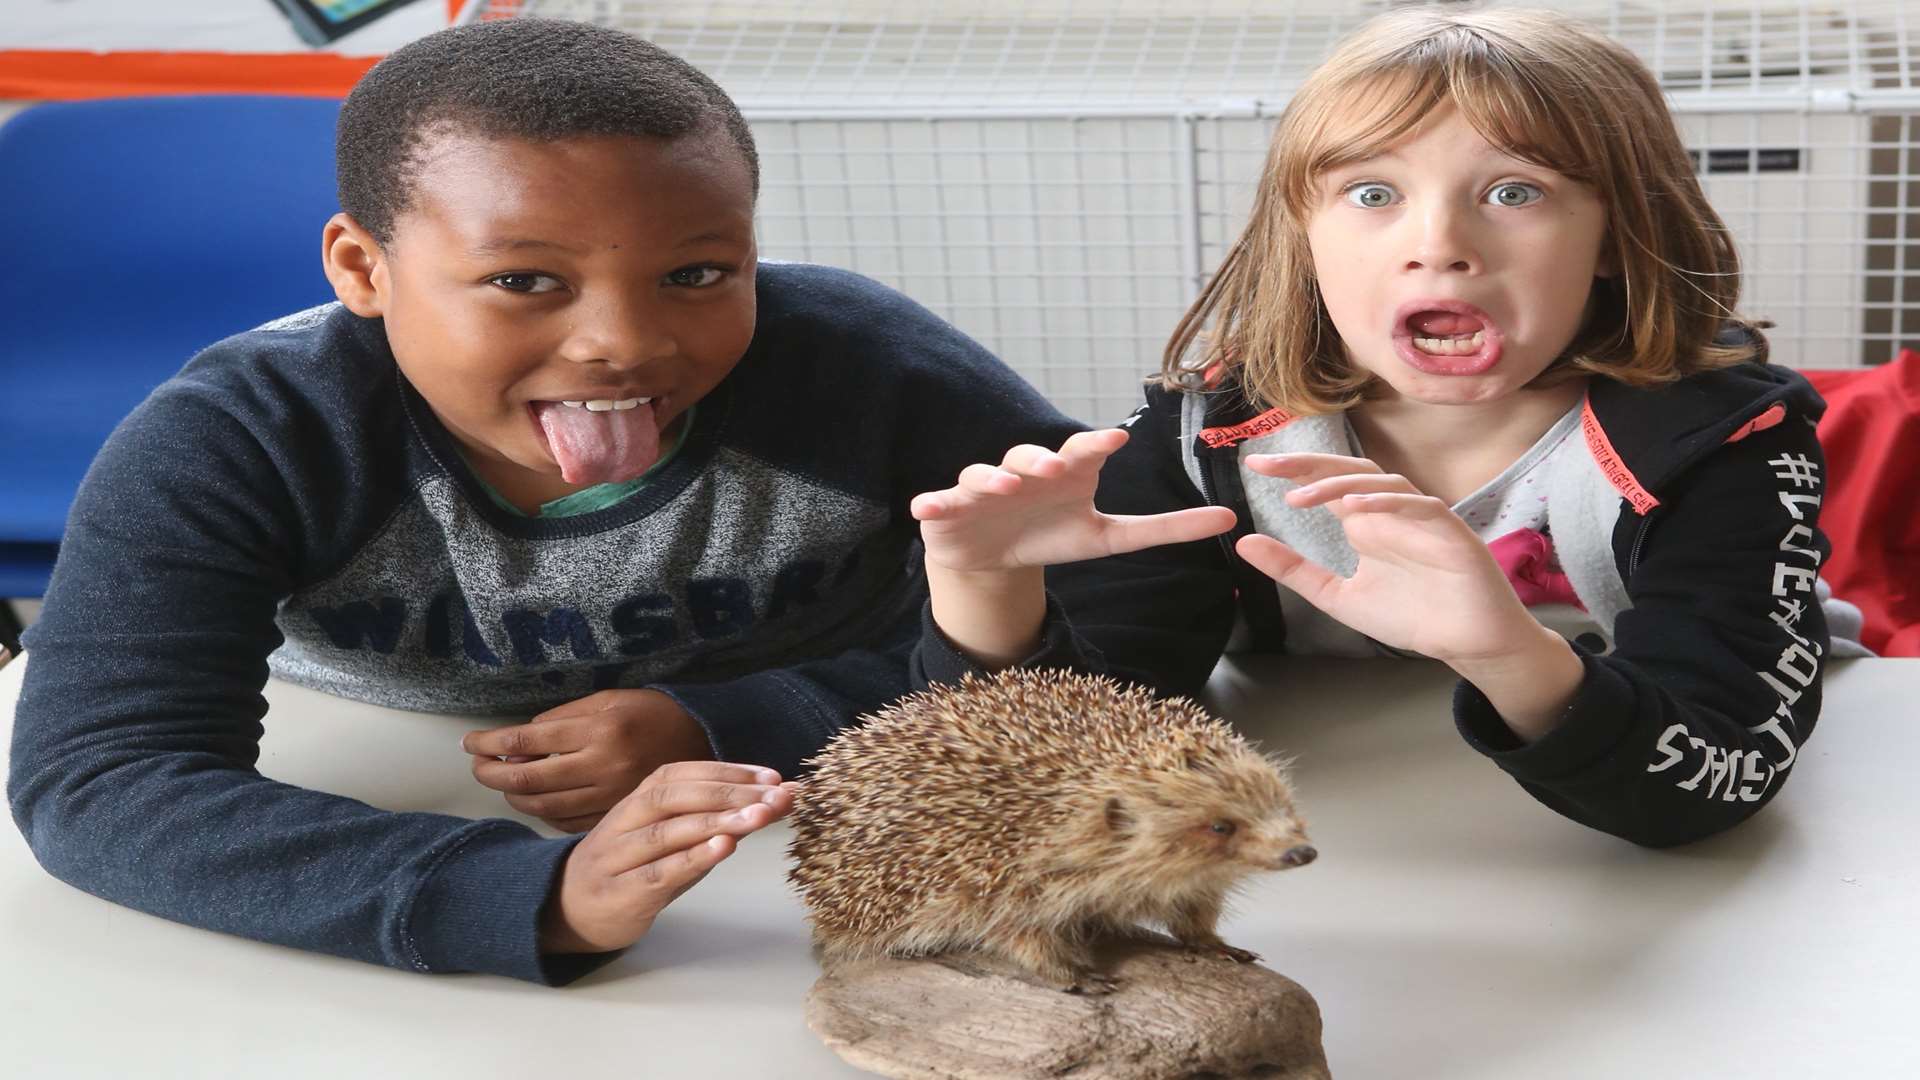 Kenye and Lucy, both eight, enjoy touching a stuffed hedgehog.